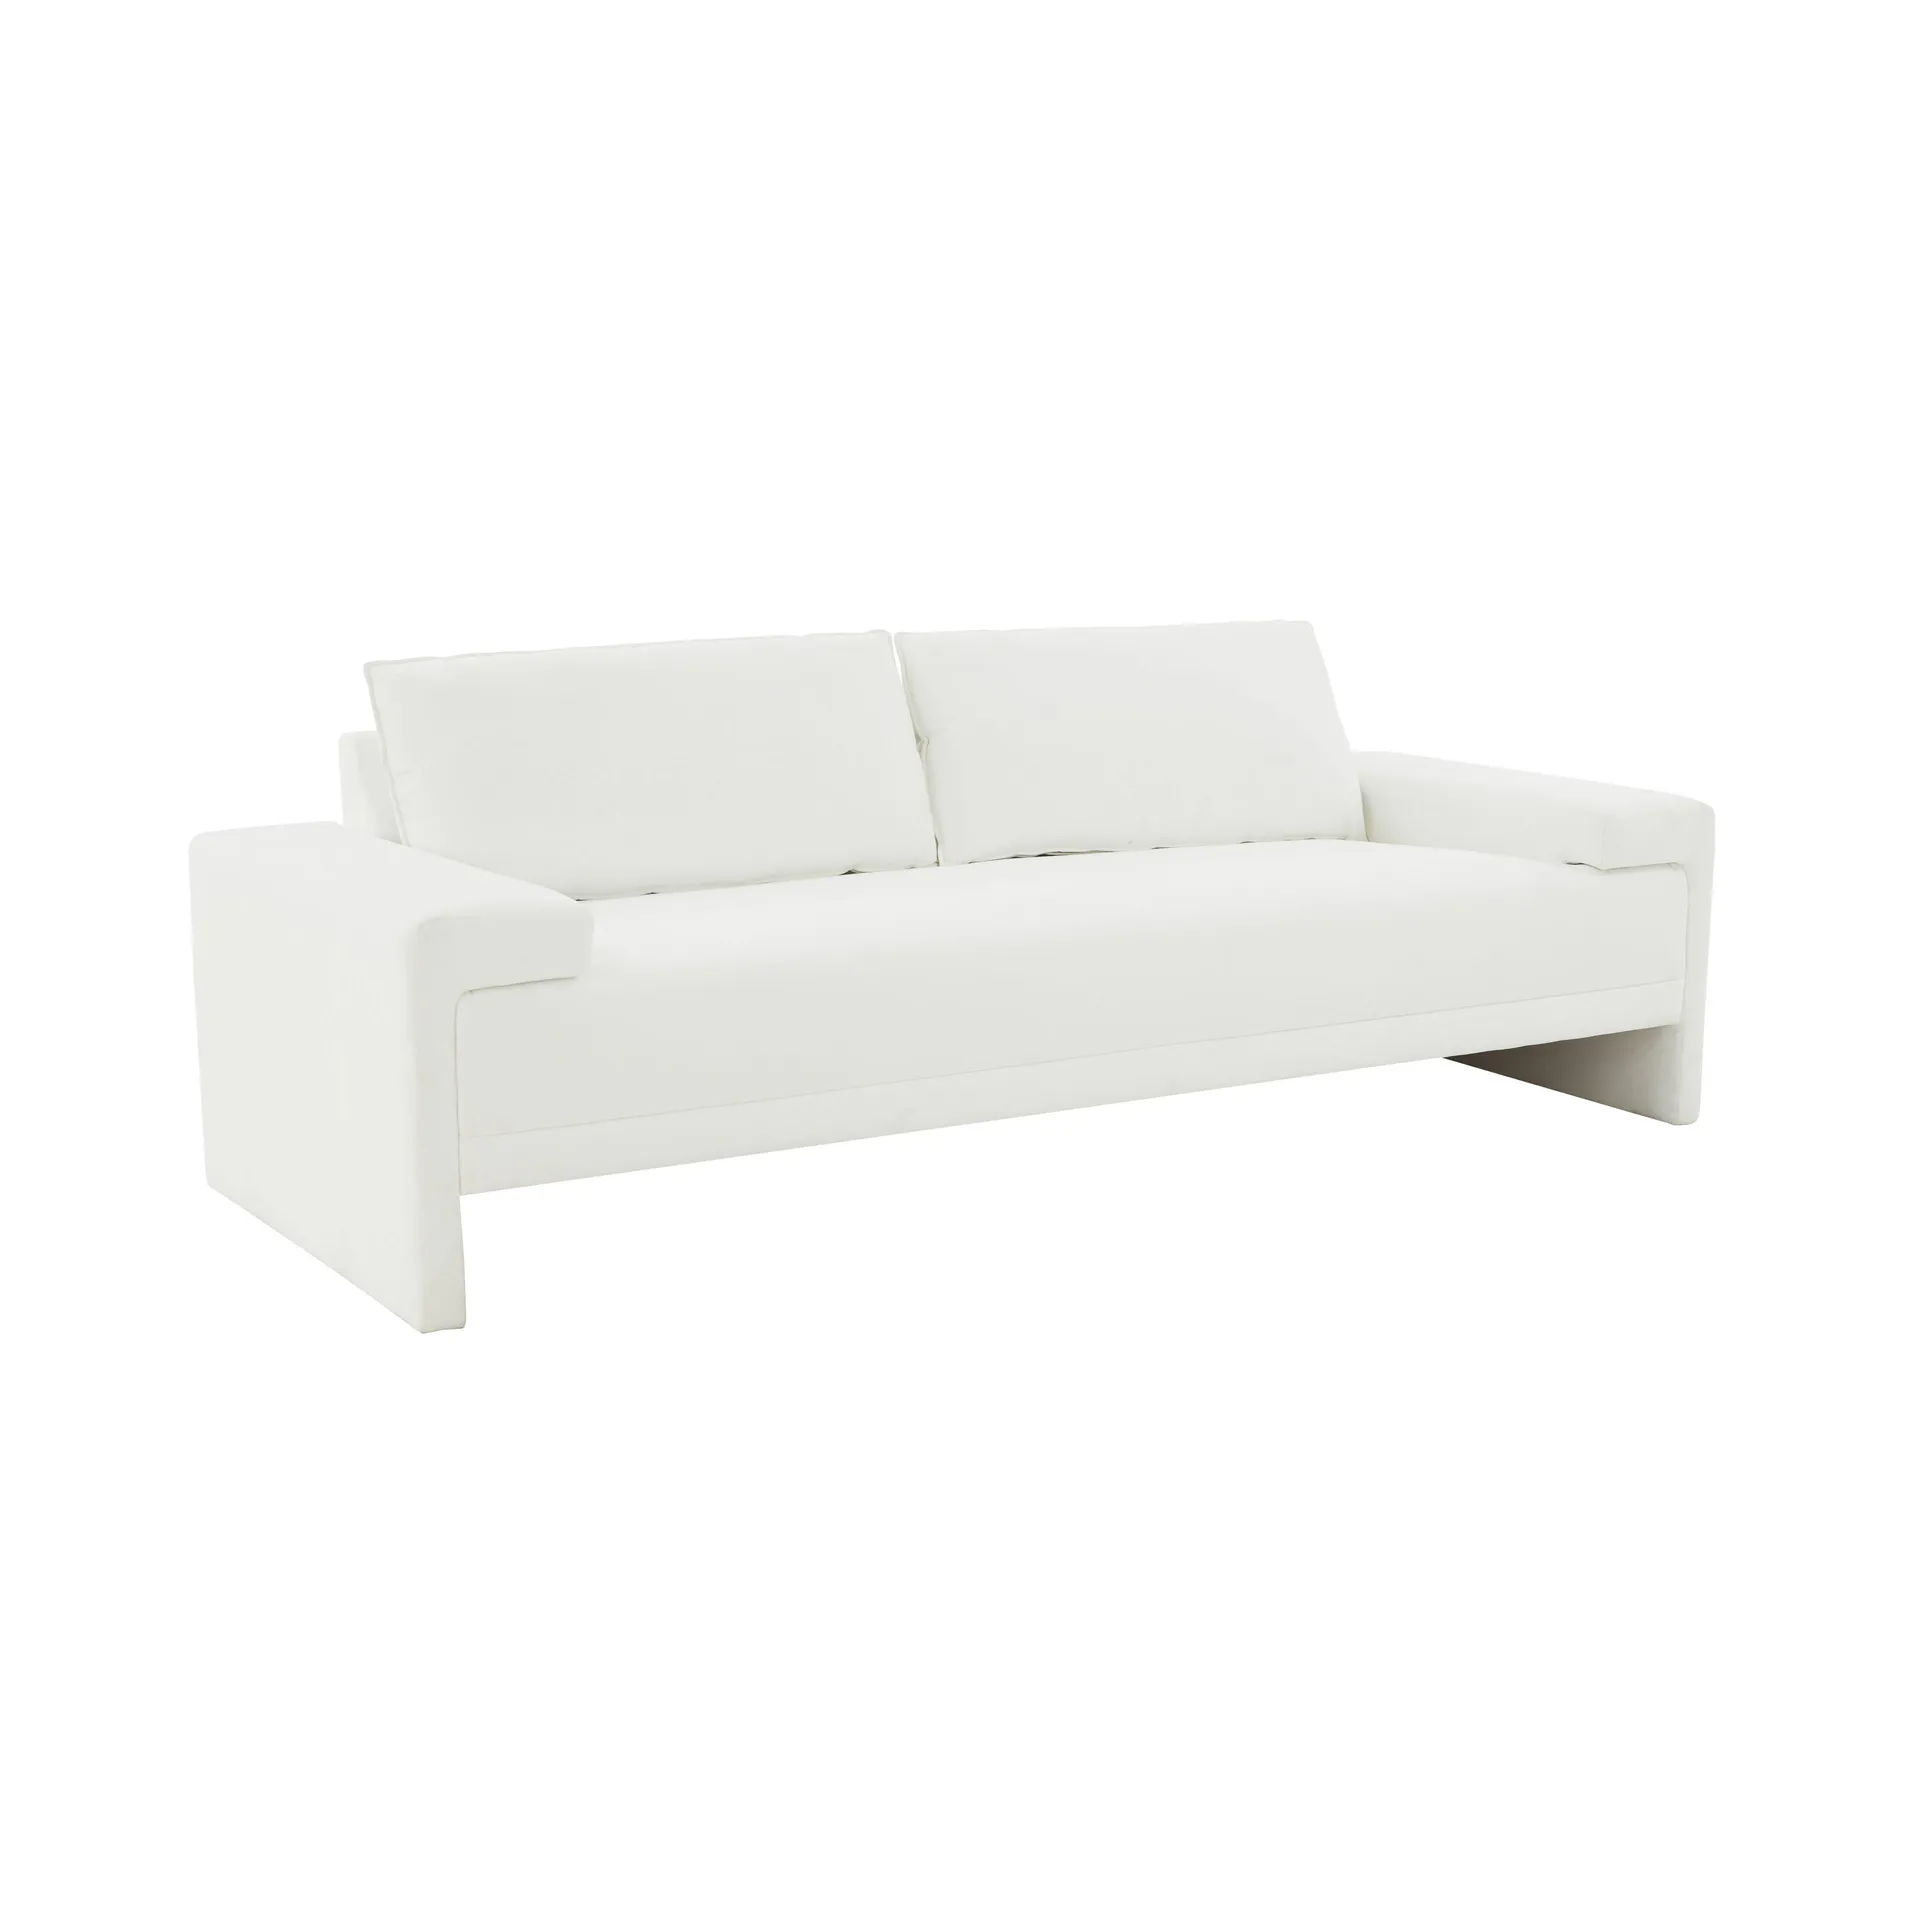 Maeve Upholstered Sofa